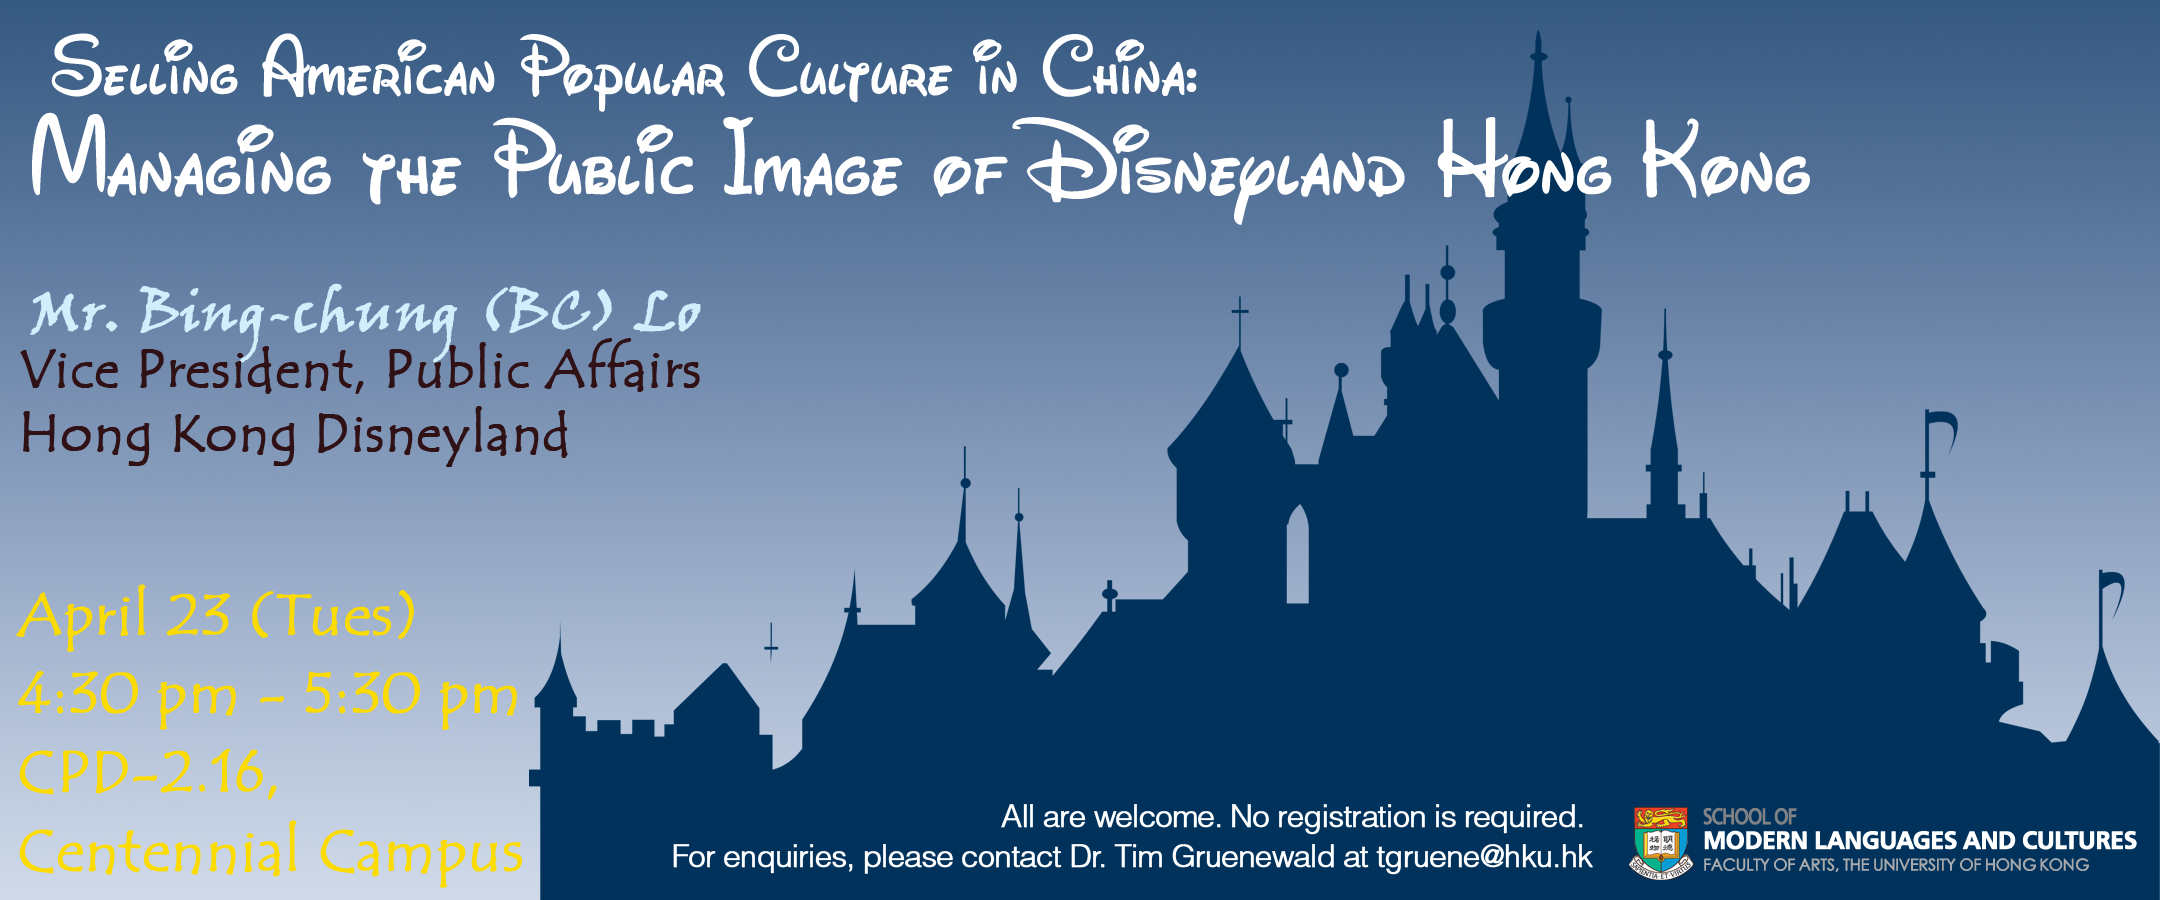 Selling American Popular Culture in China: Managing the Public Image of  Disneyland Hong Kong